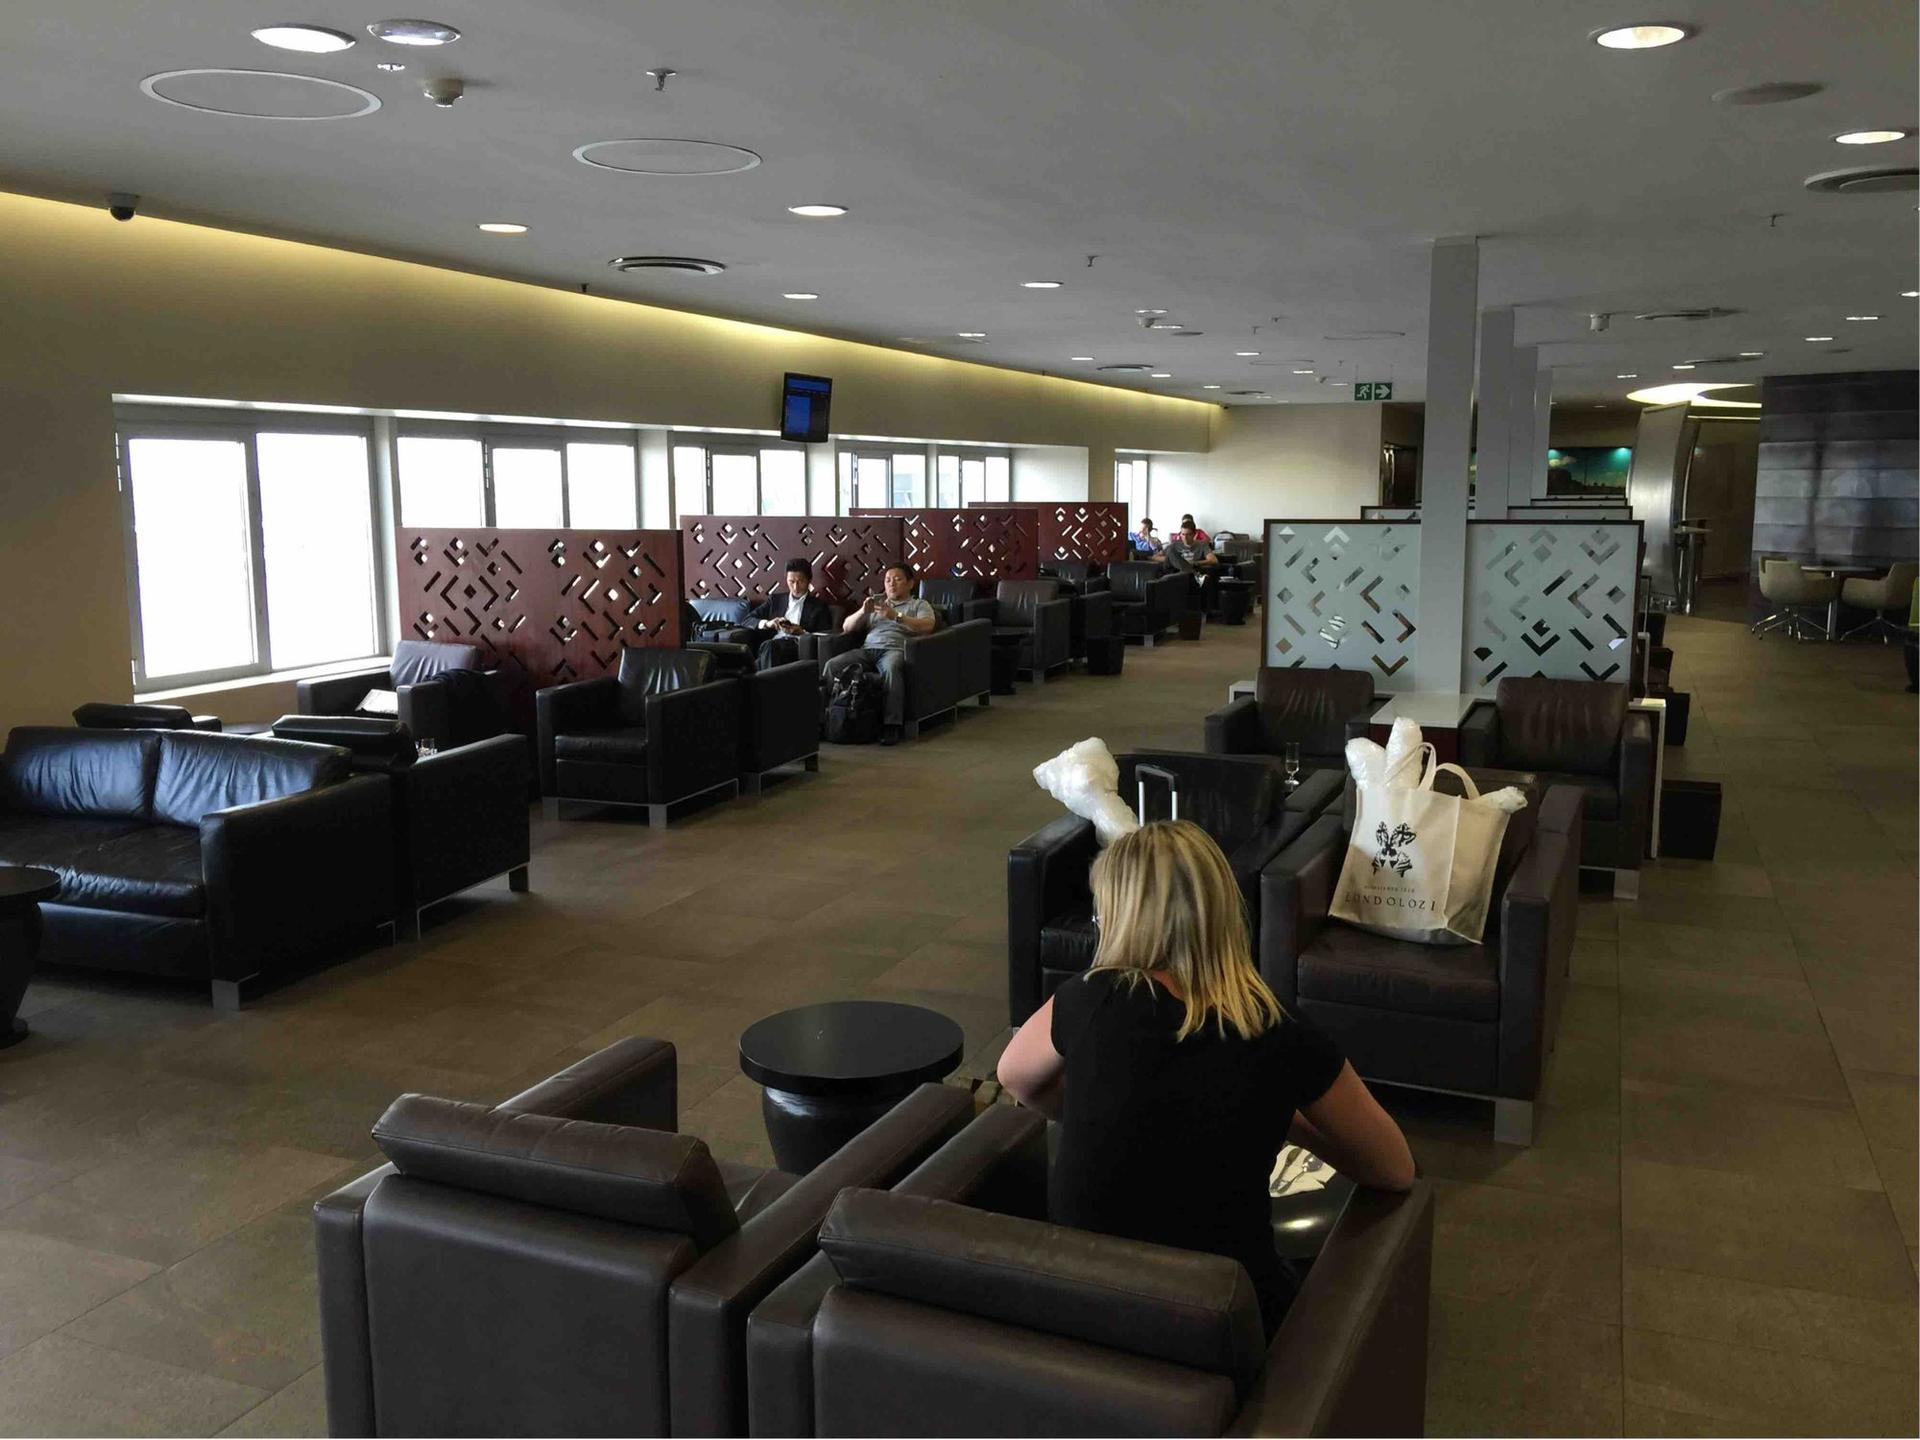 SAA South African Airways International Premium Lounge image 12 of 31